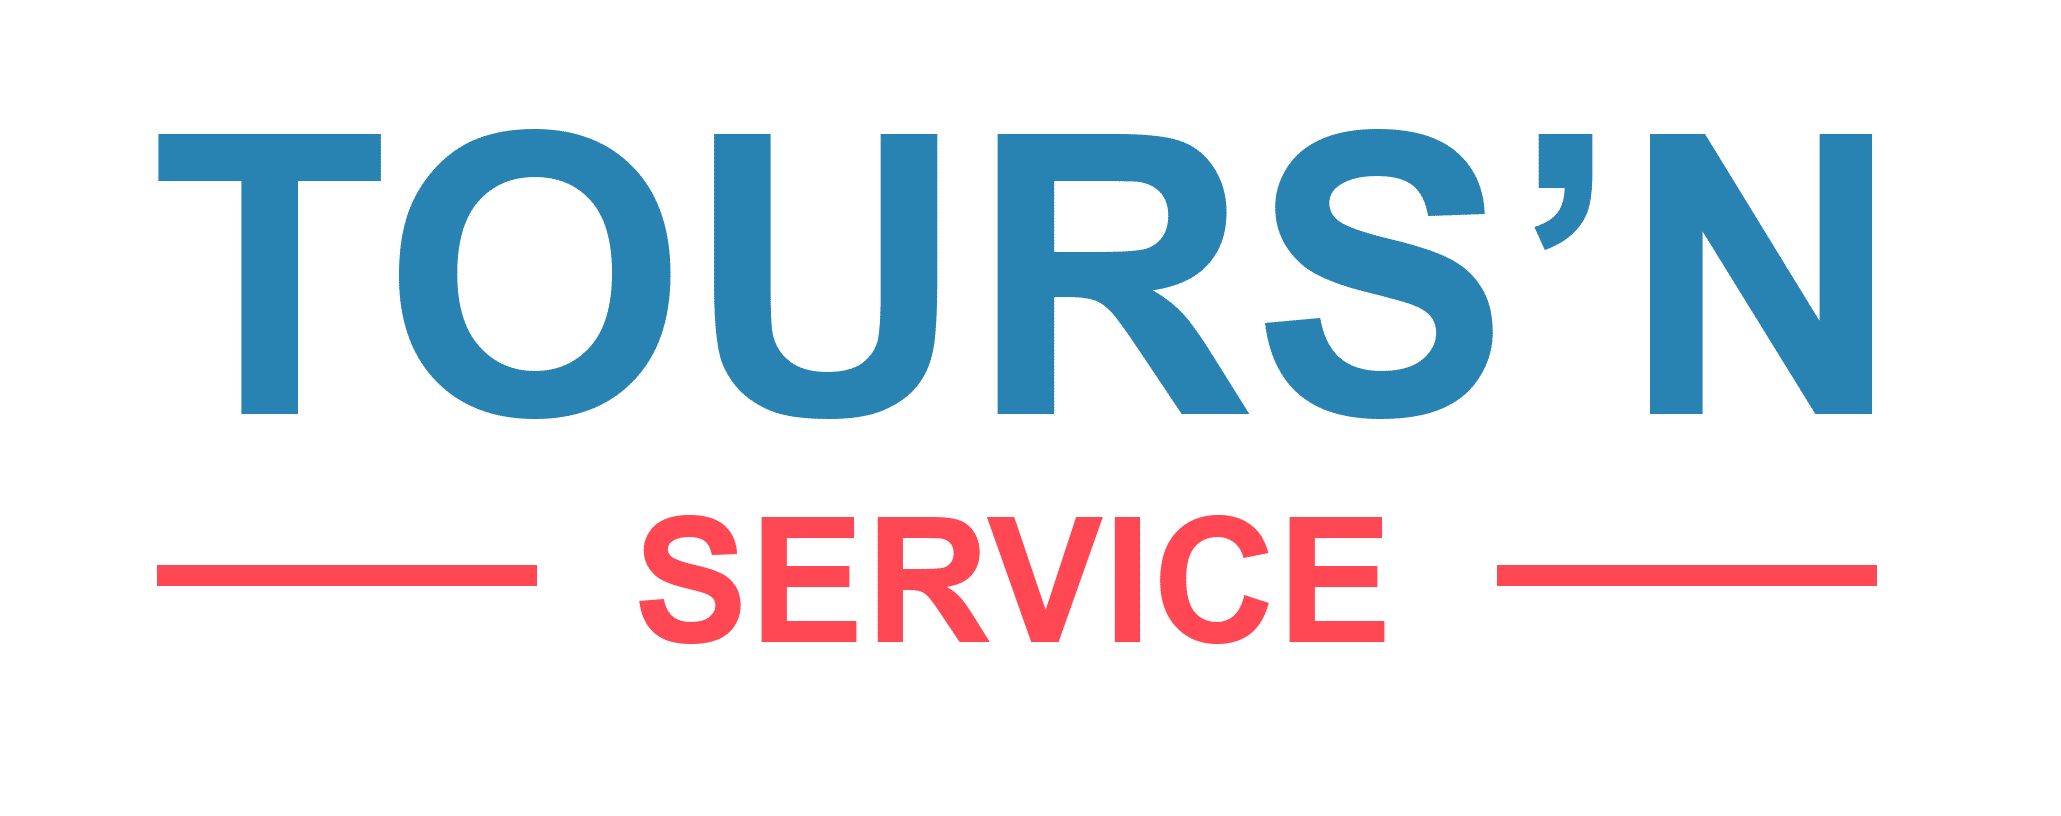 Tours' N Service